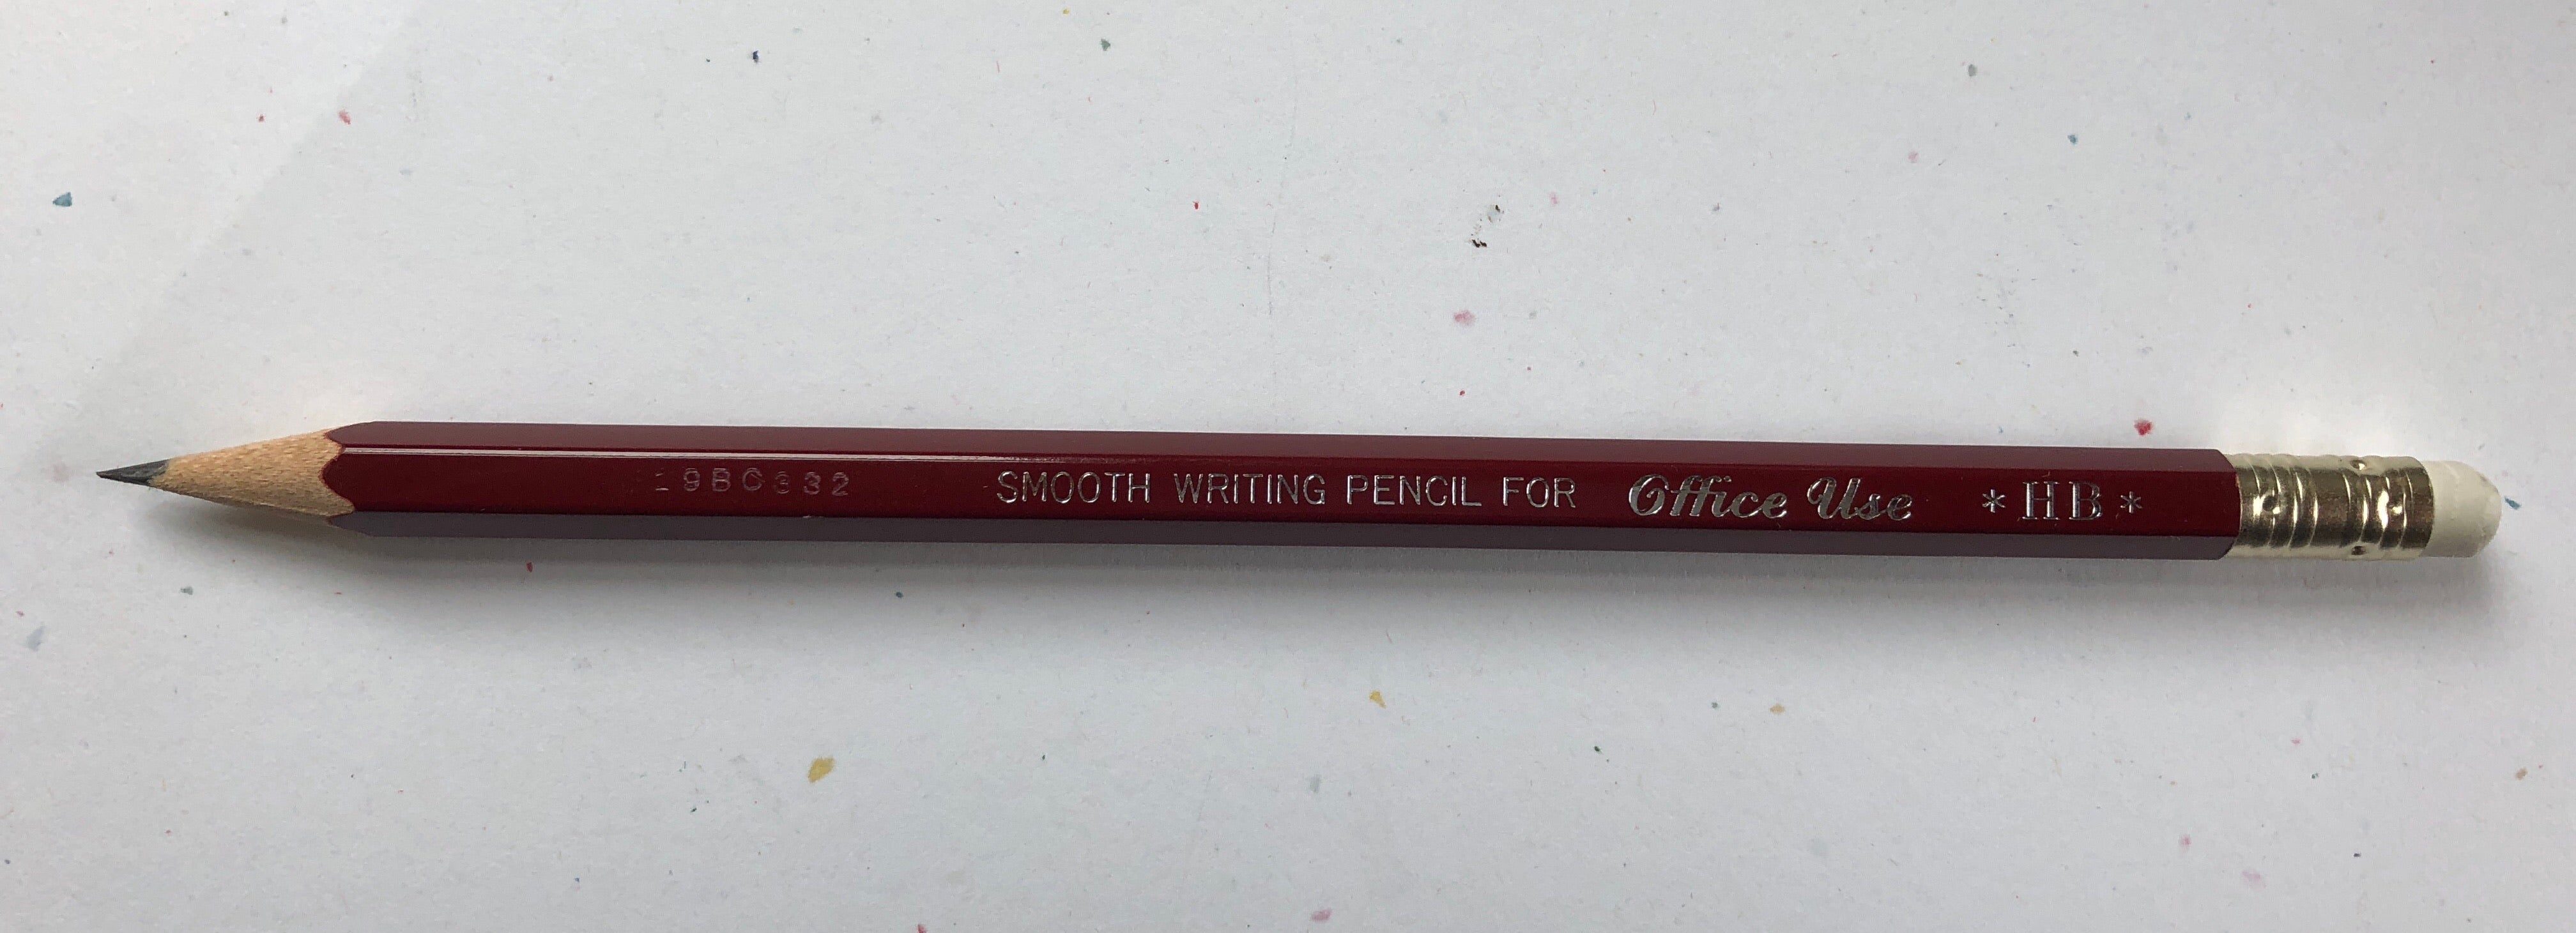 Mitsubishi 9850 HB Pencil